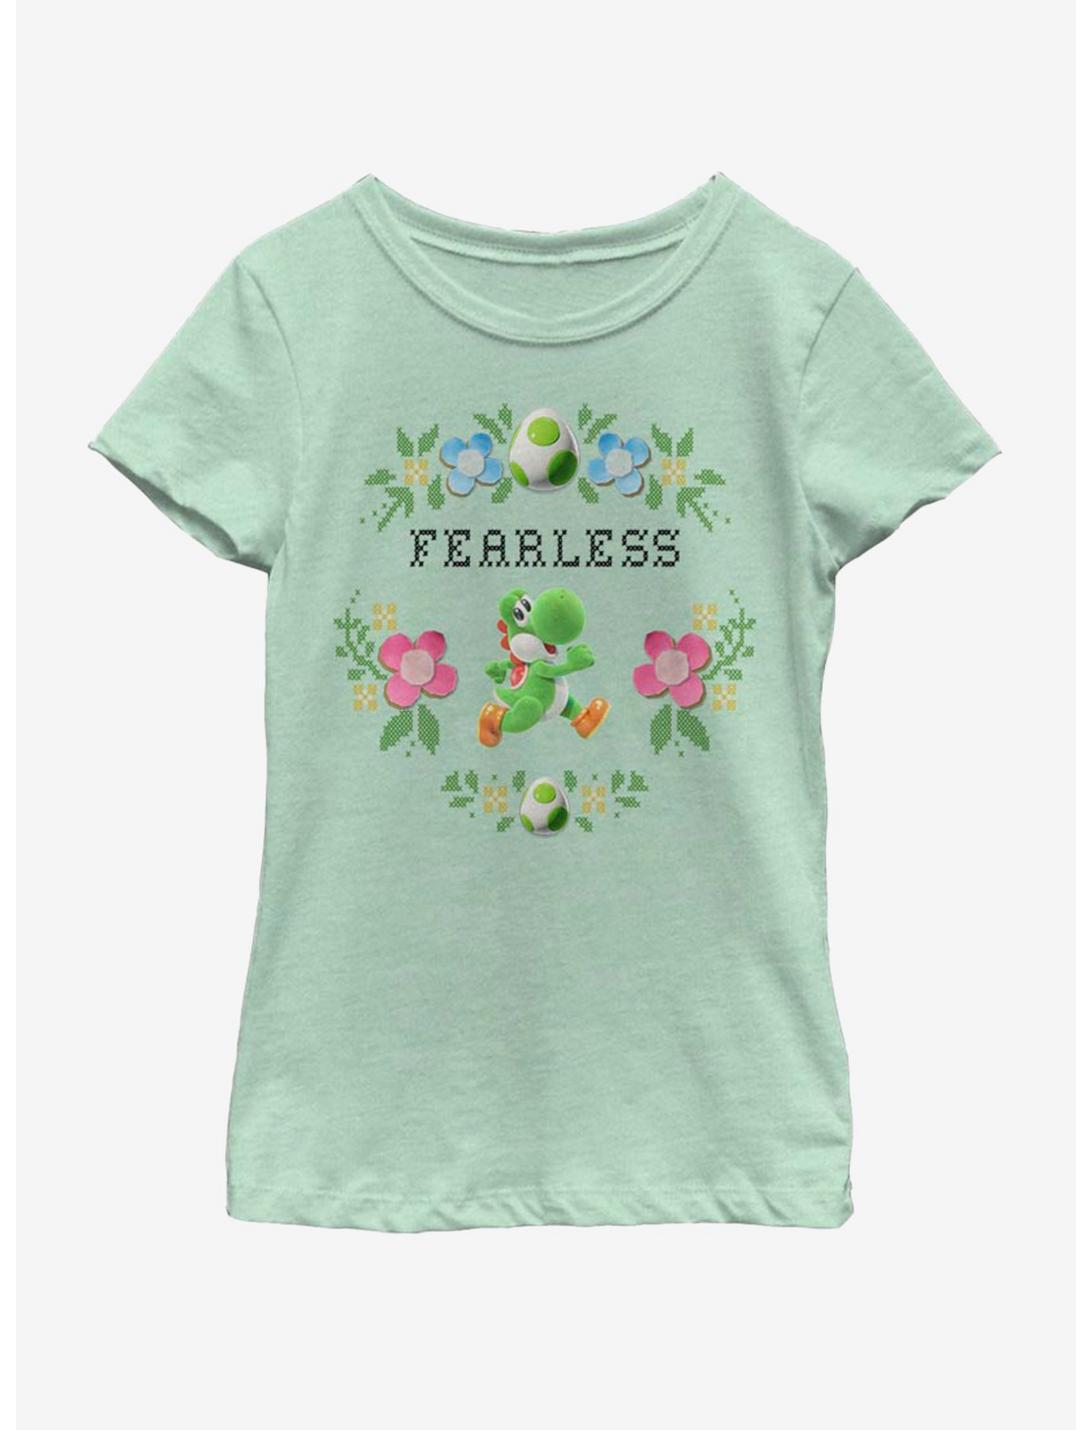 Nintendo Fearless Yoshi Cross Stitch Youth Girls T-Shirt, MINT, hi-res